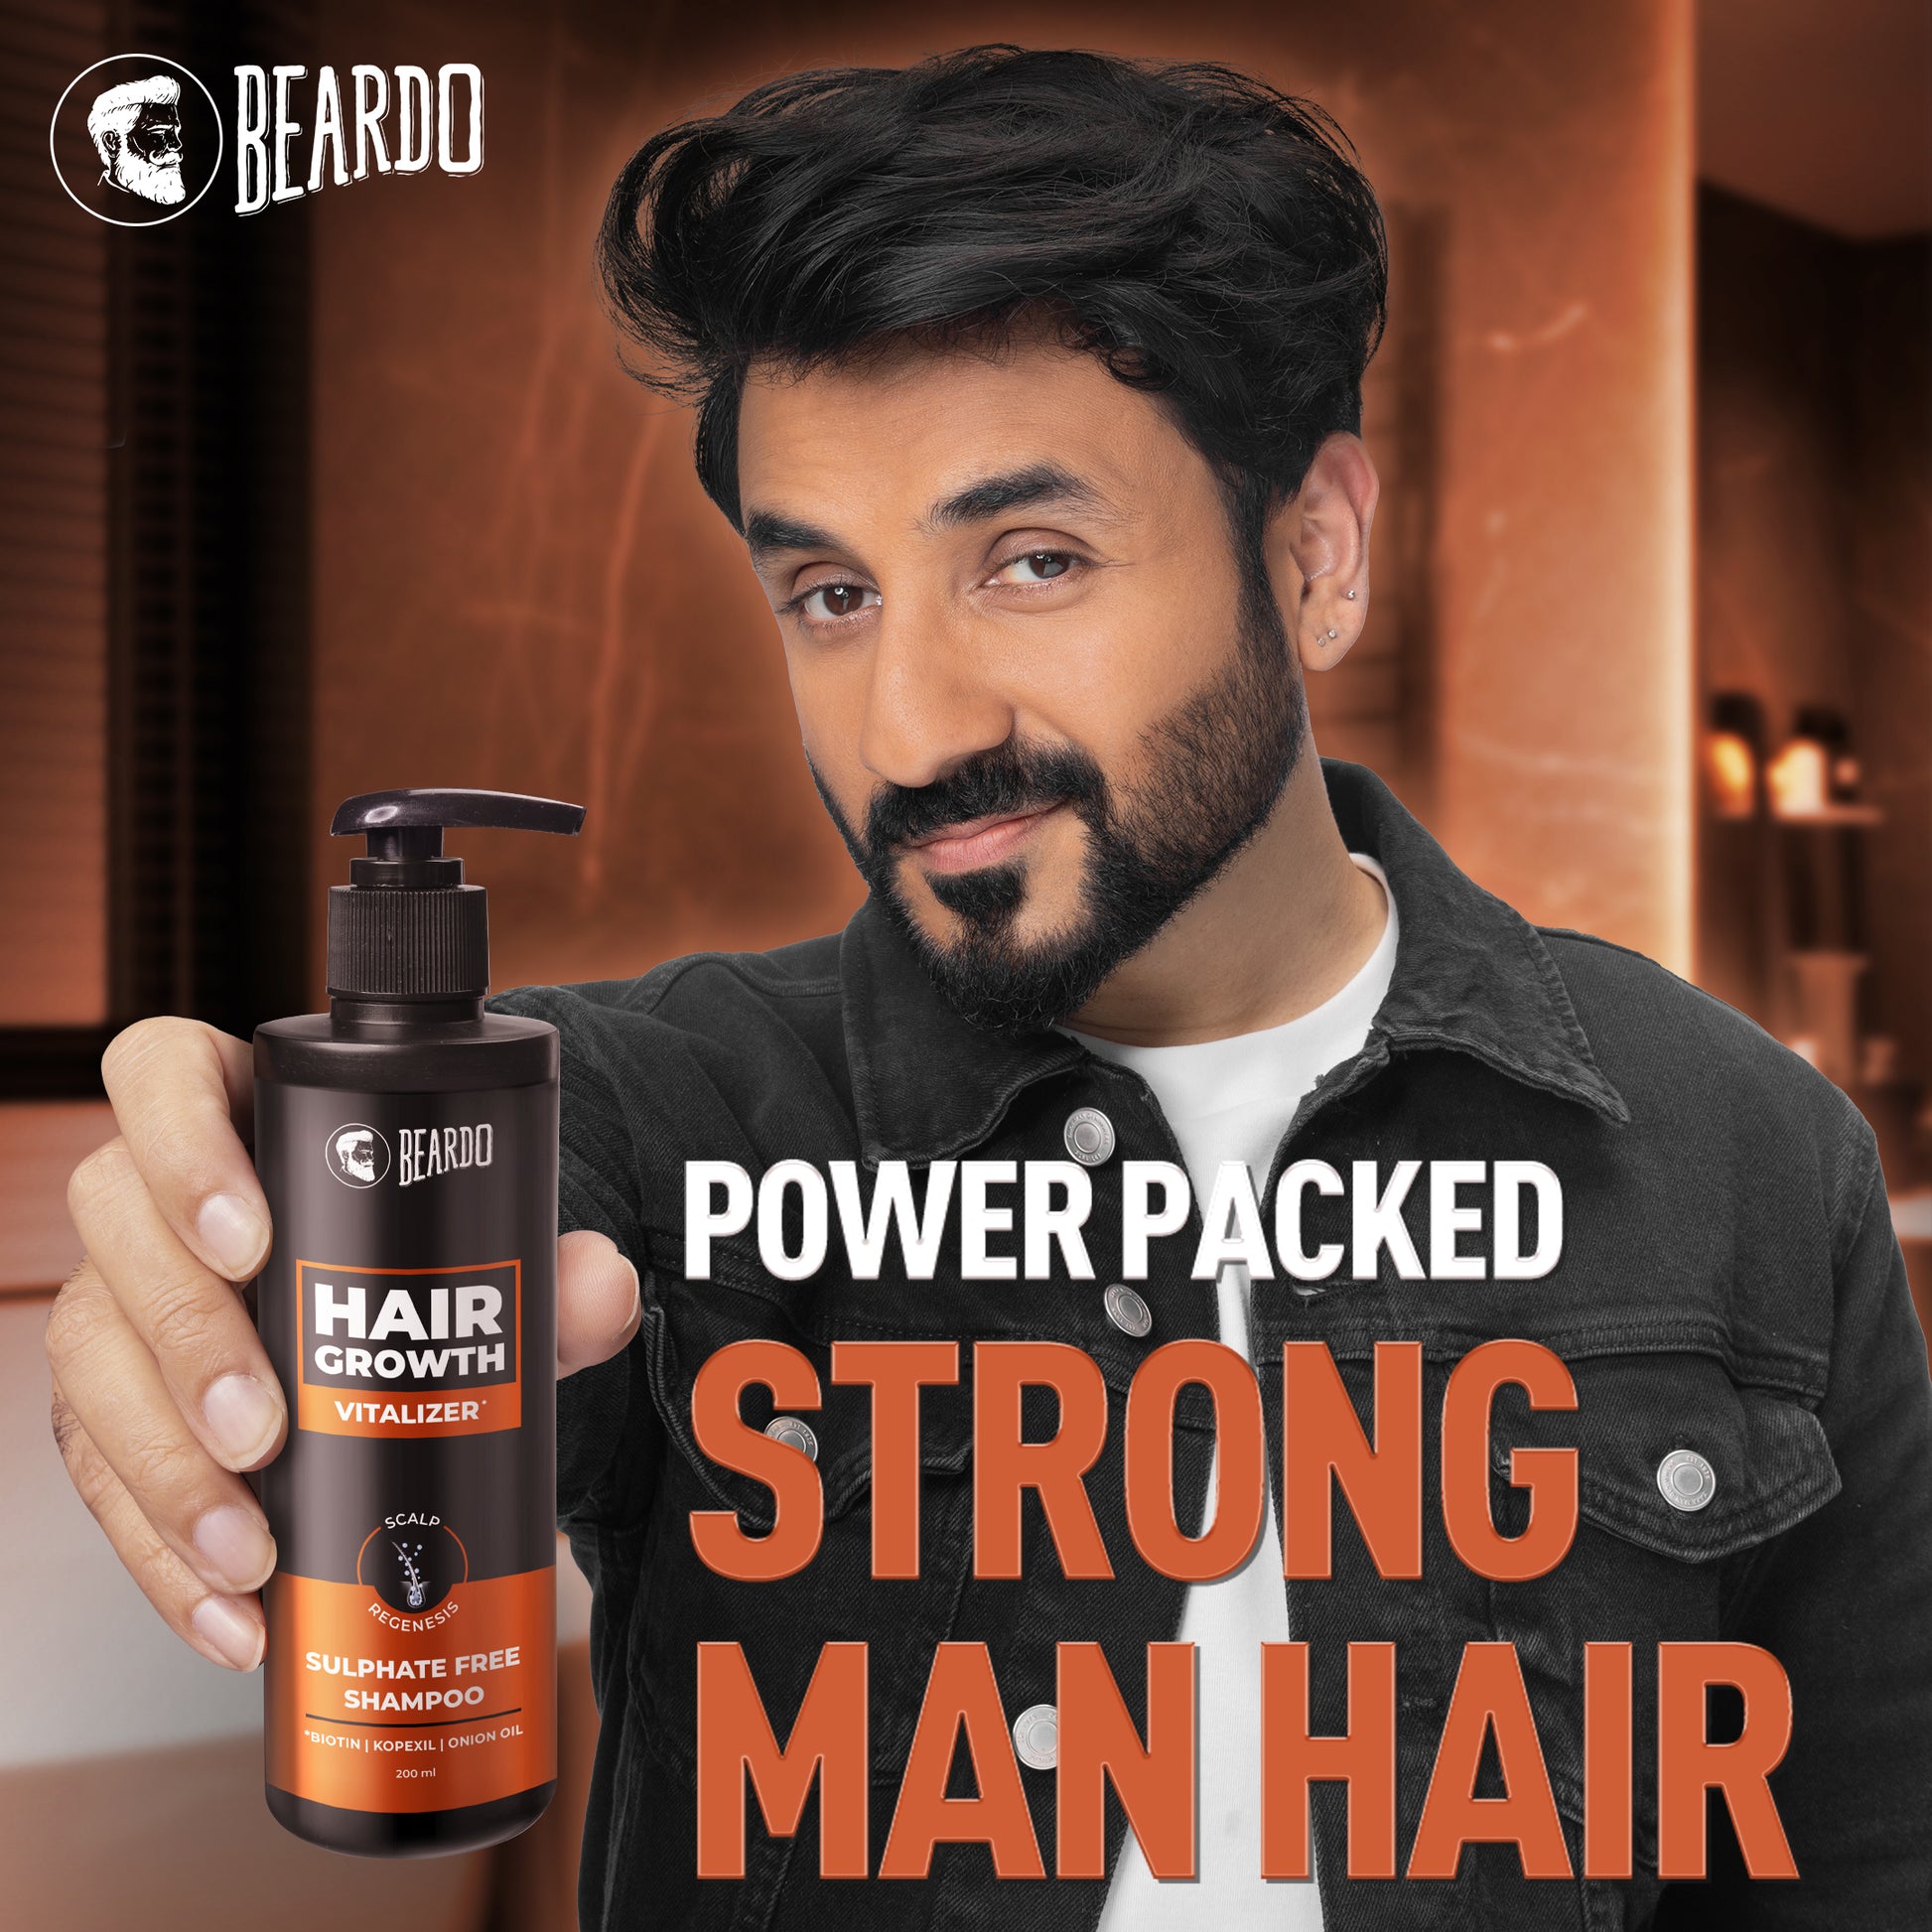  beardo hair growth vitalizer